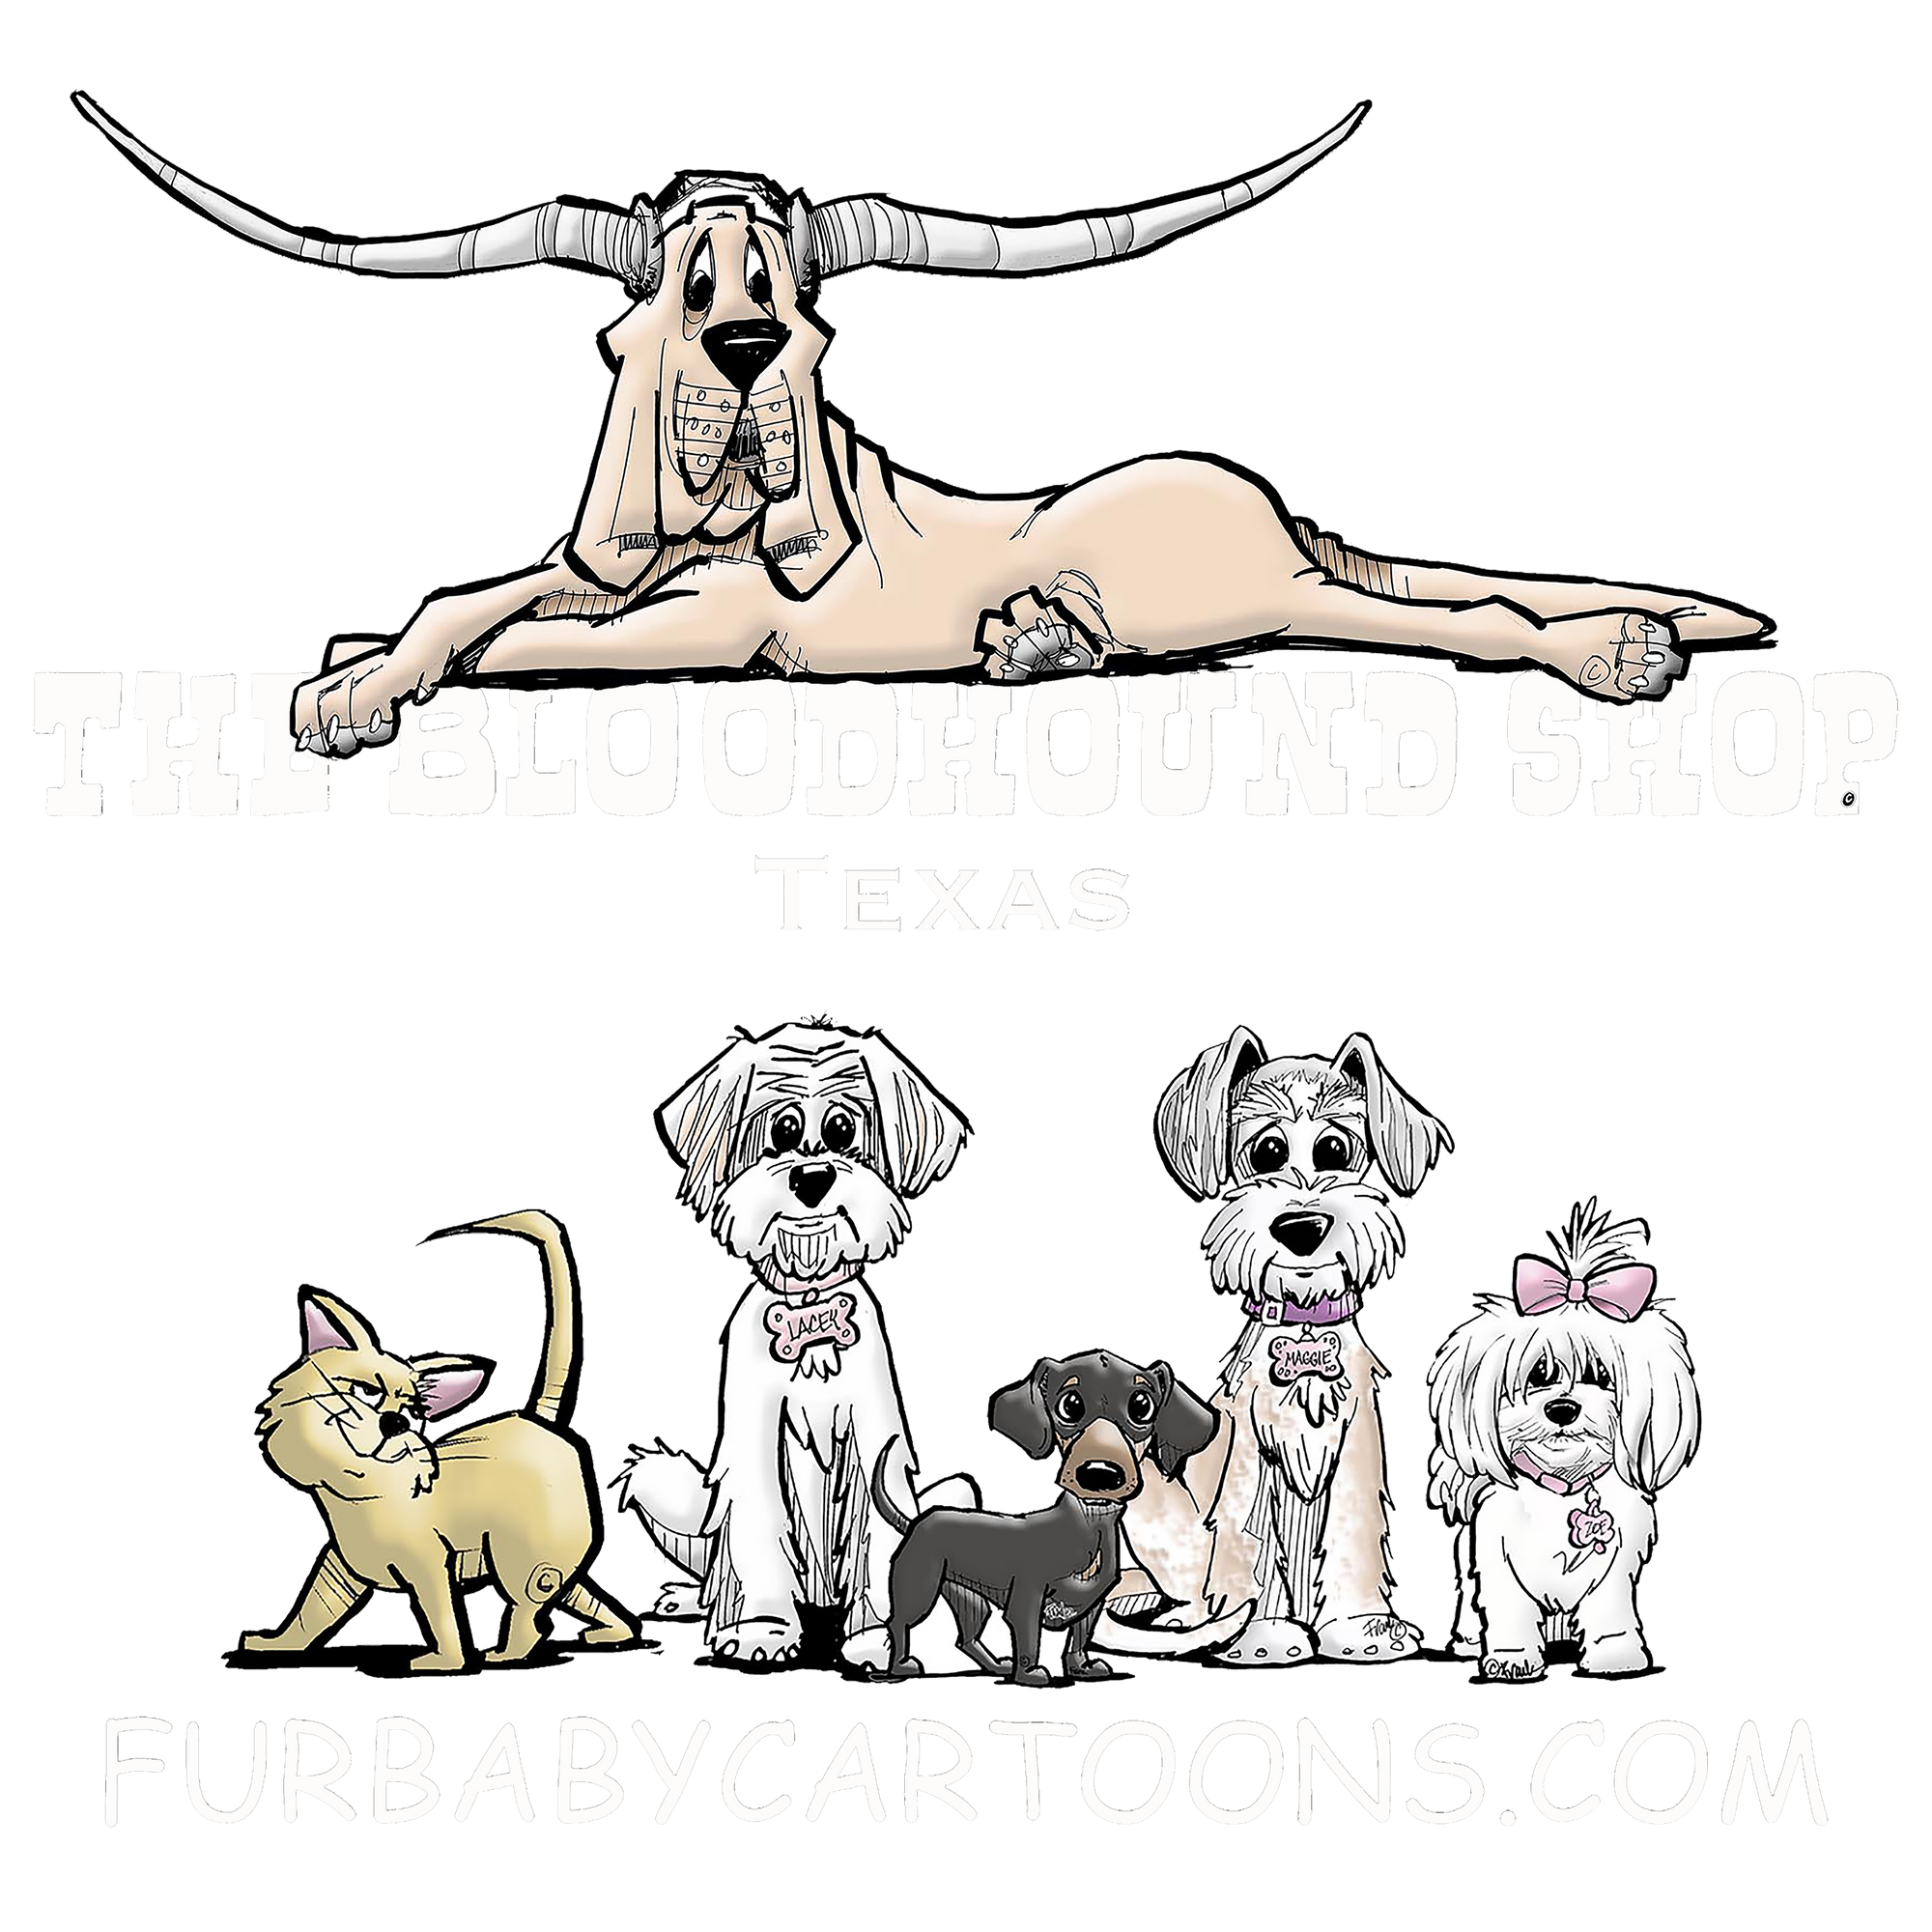 The Bloodhound Shop